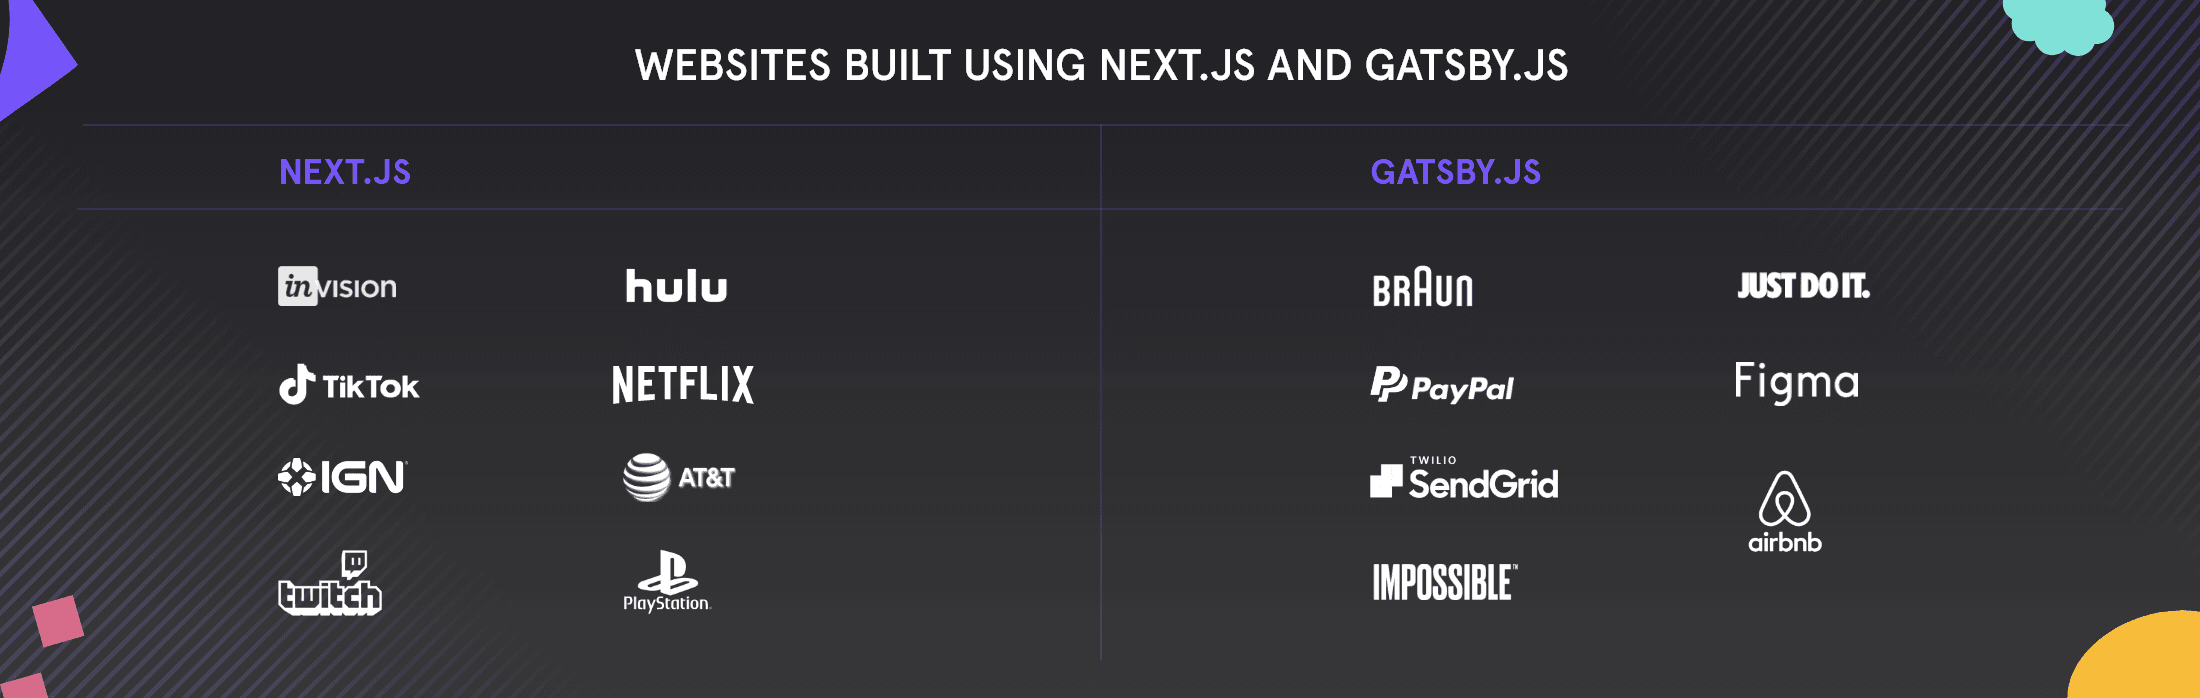 Website building using next.js and gatsby.js